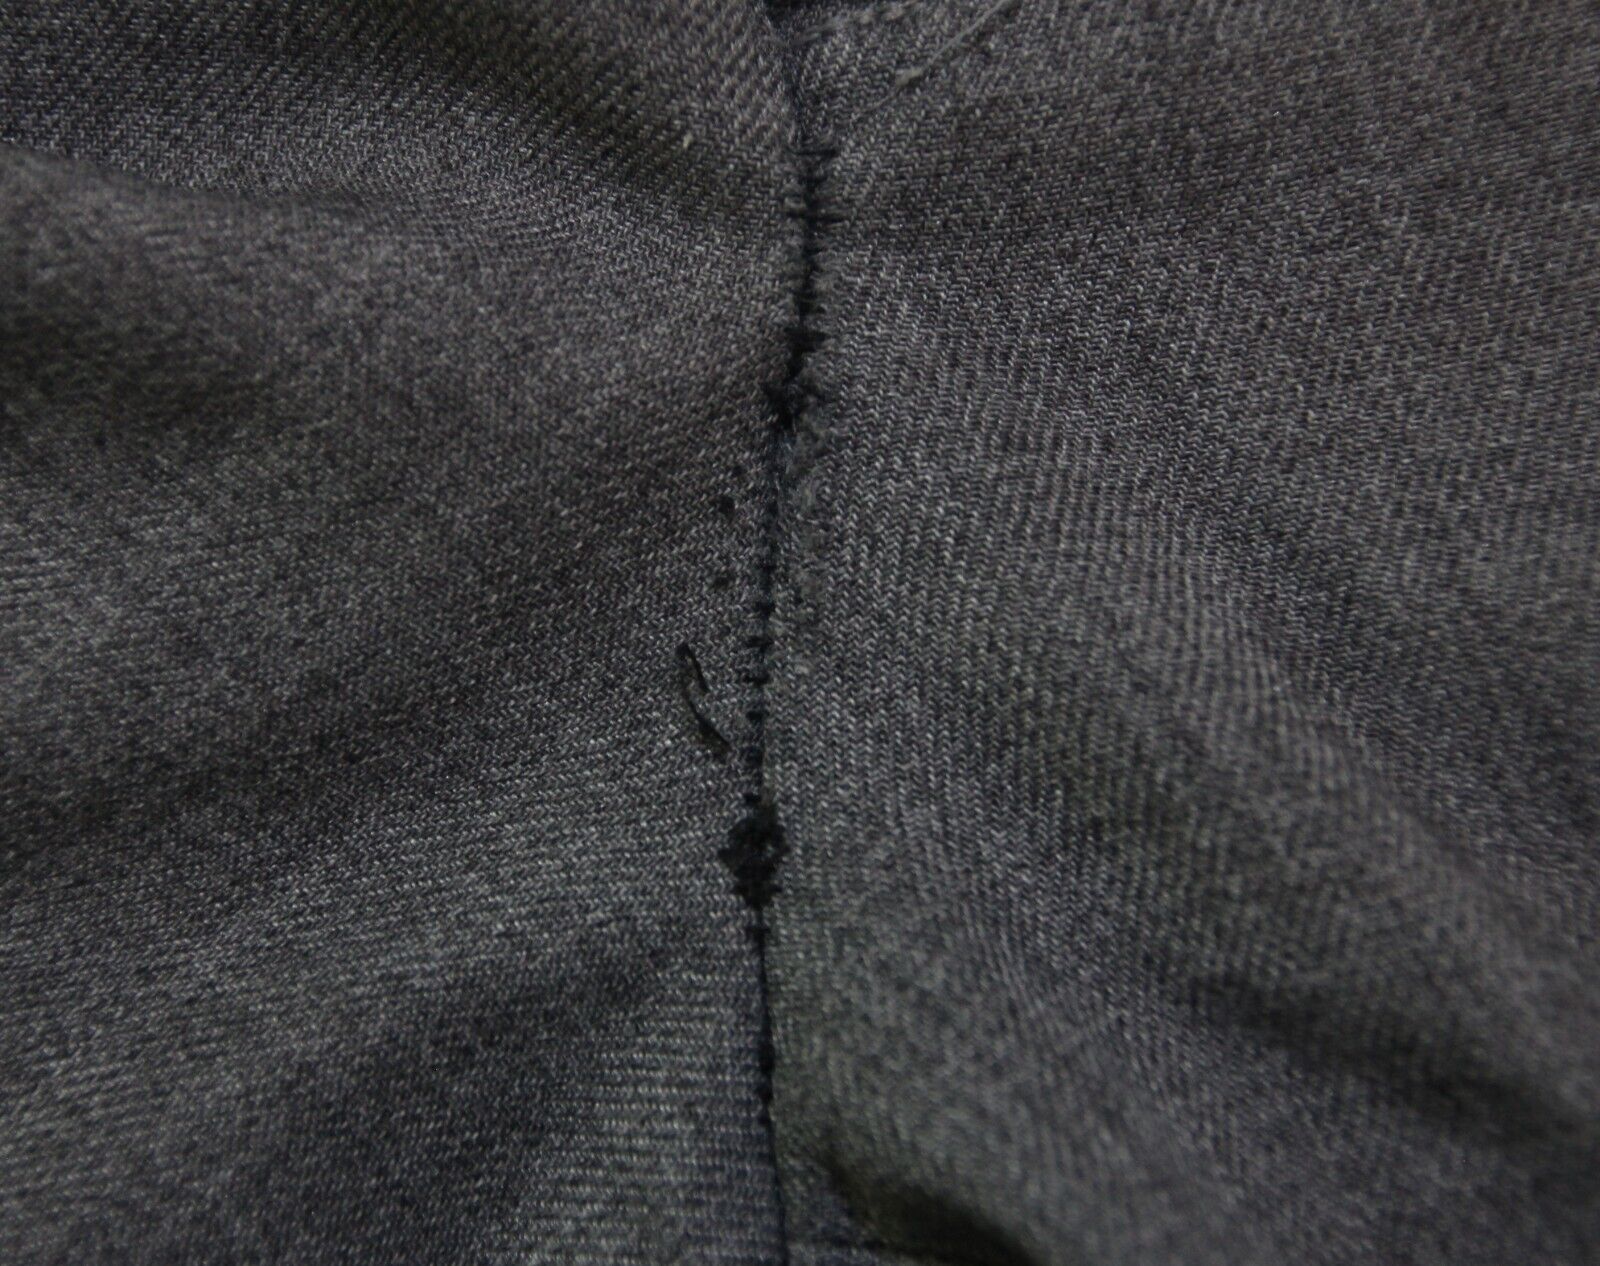 Pierre Cardin dress pants, 32x28 hemmed / Vintage… - image 7